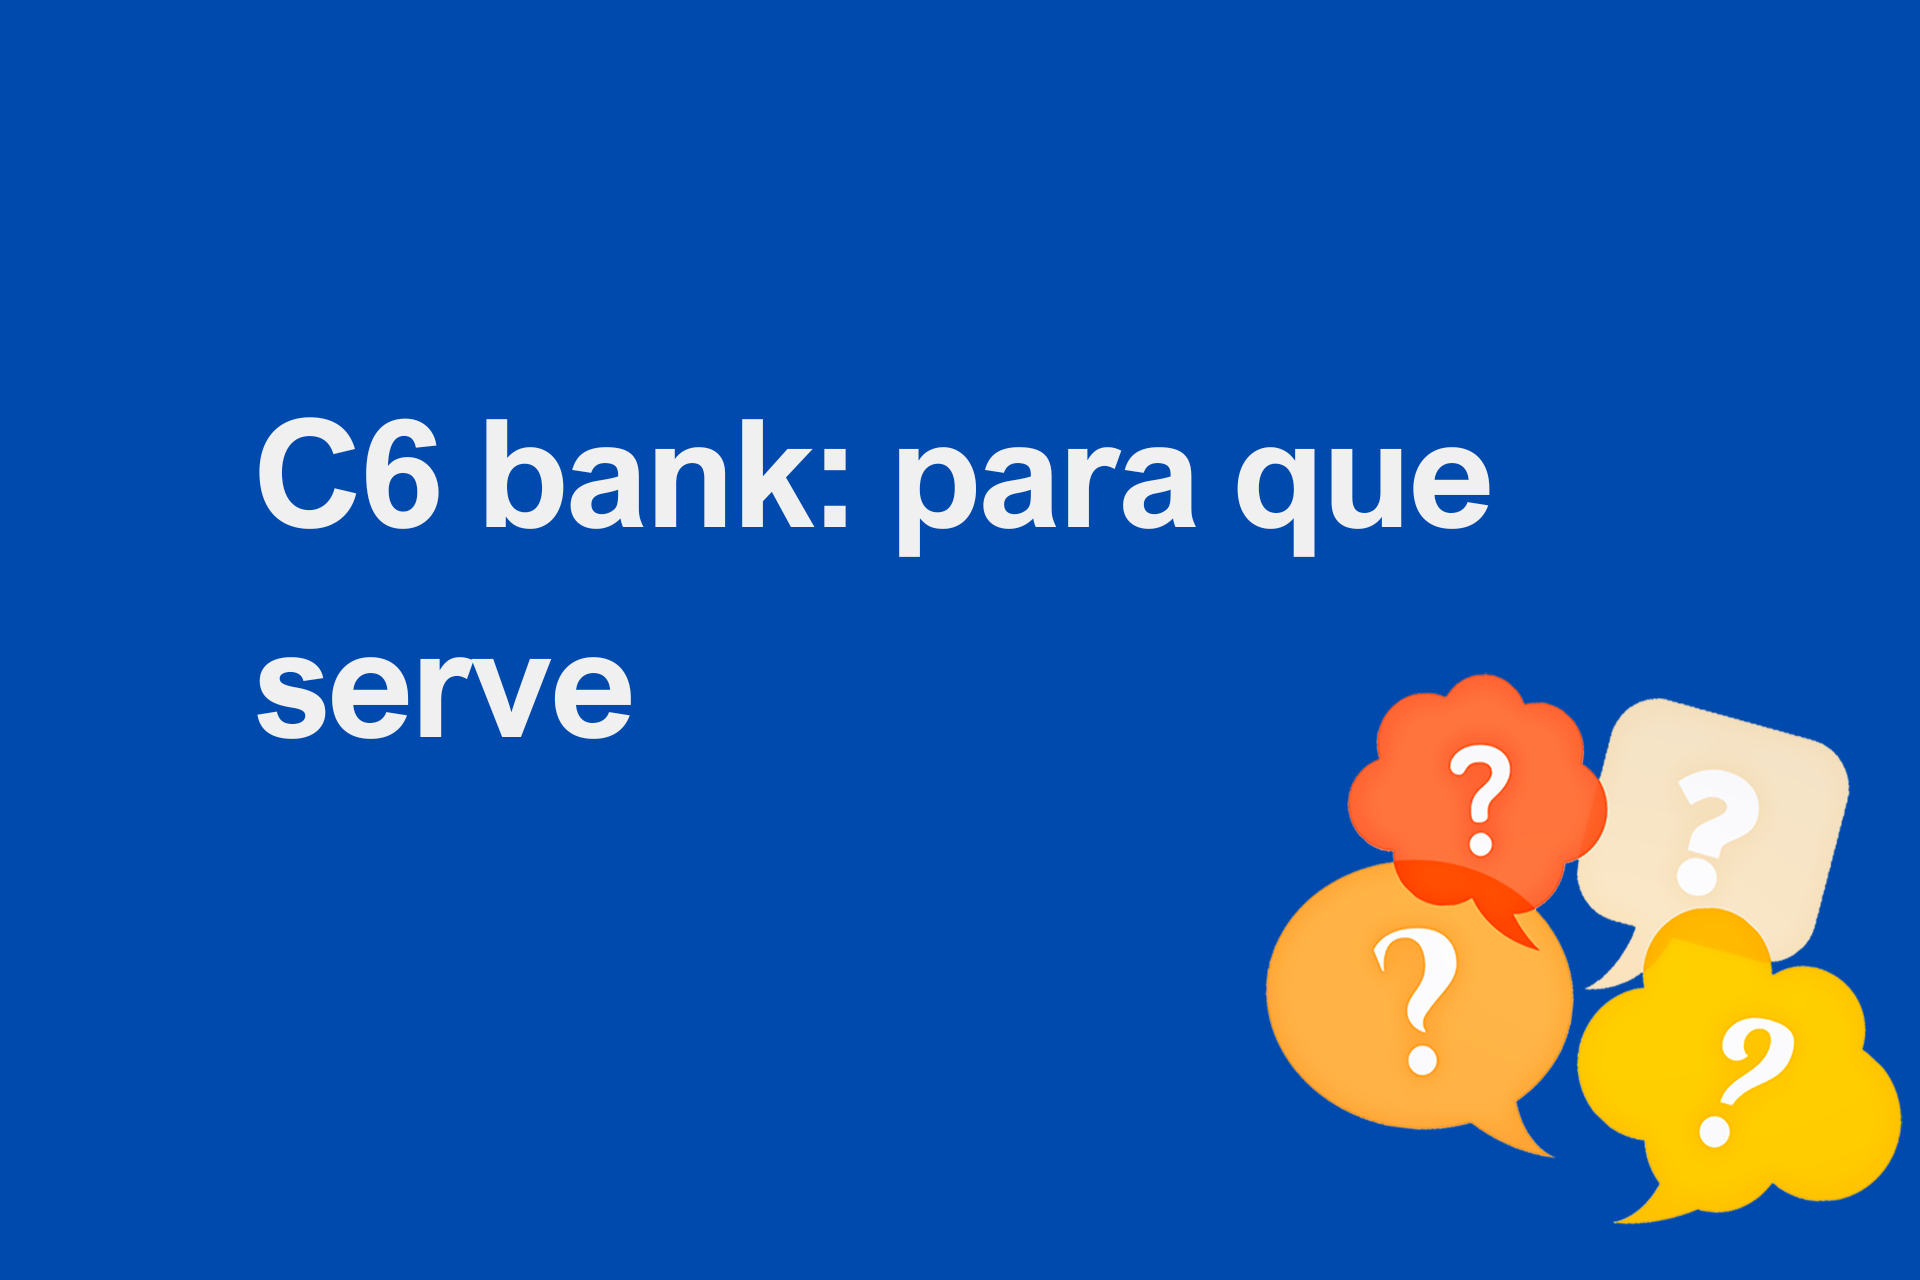 C6 bank: para que serve?